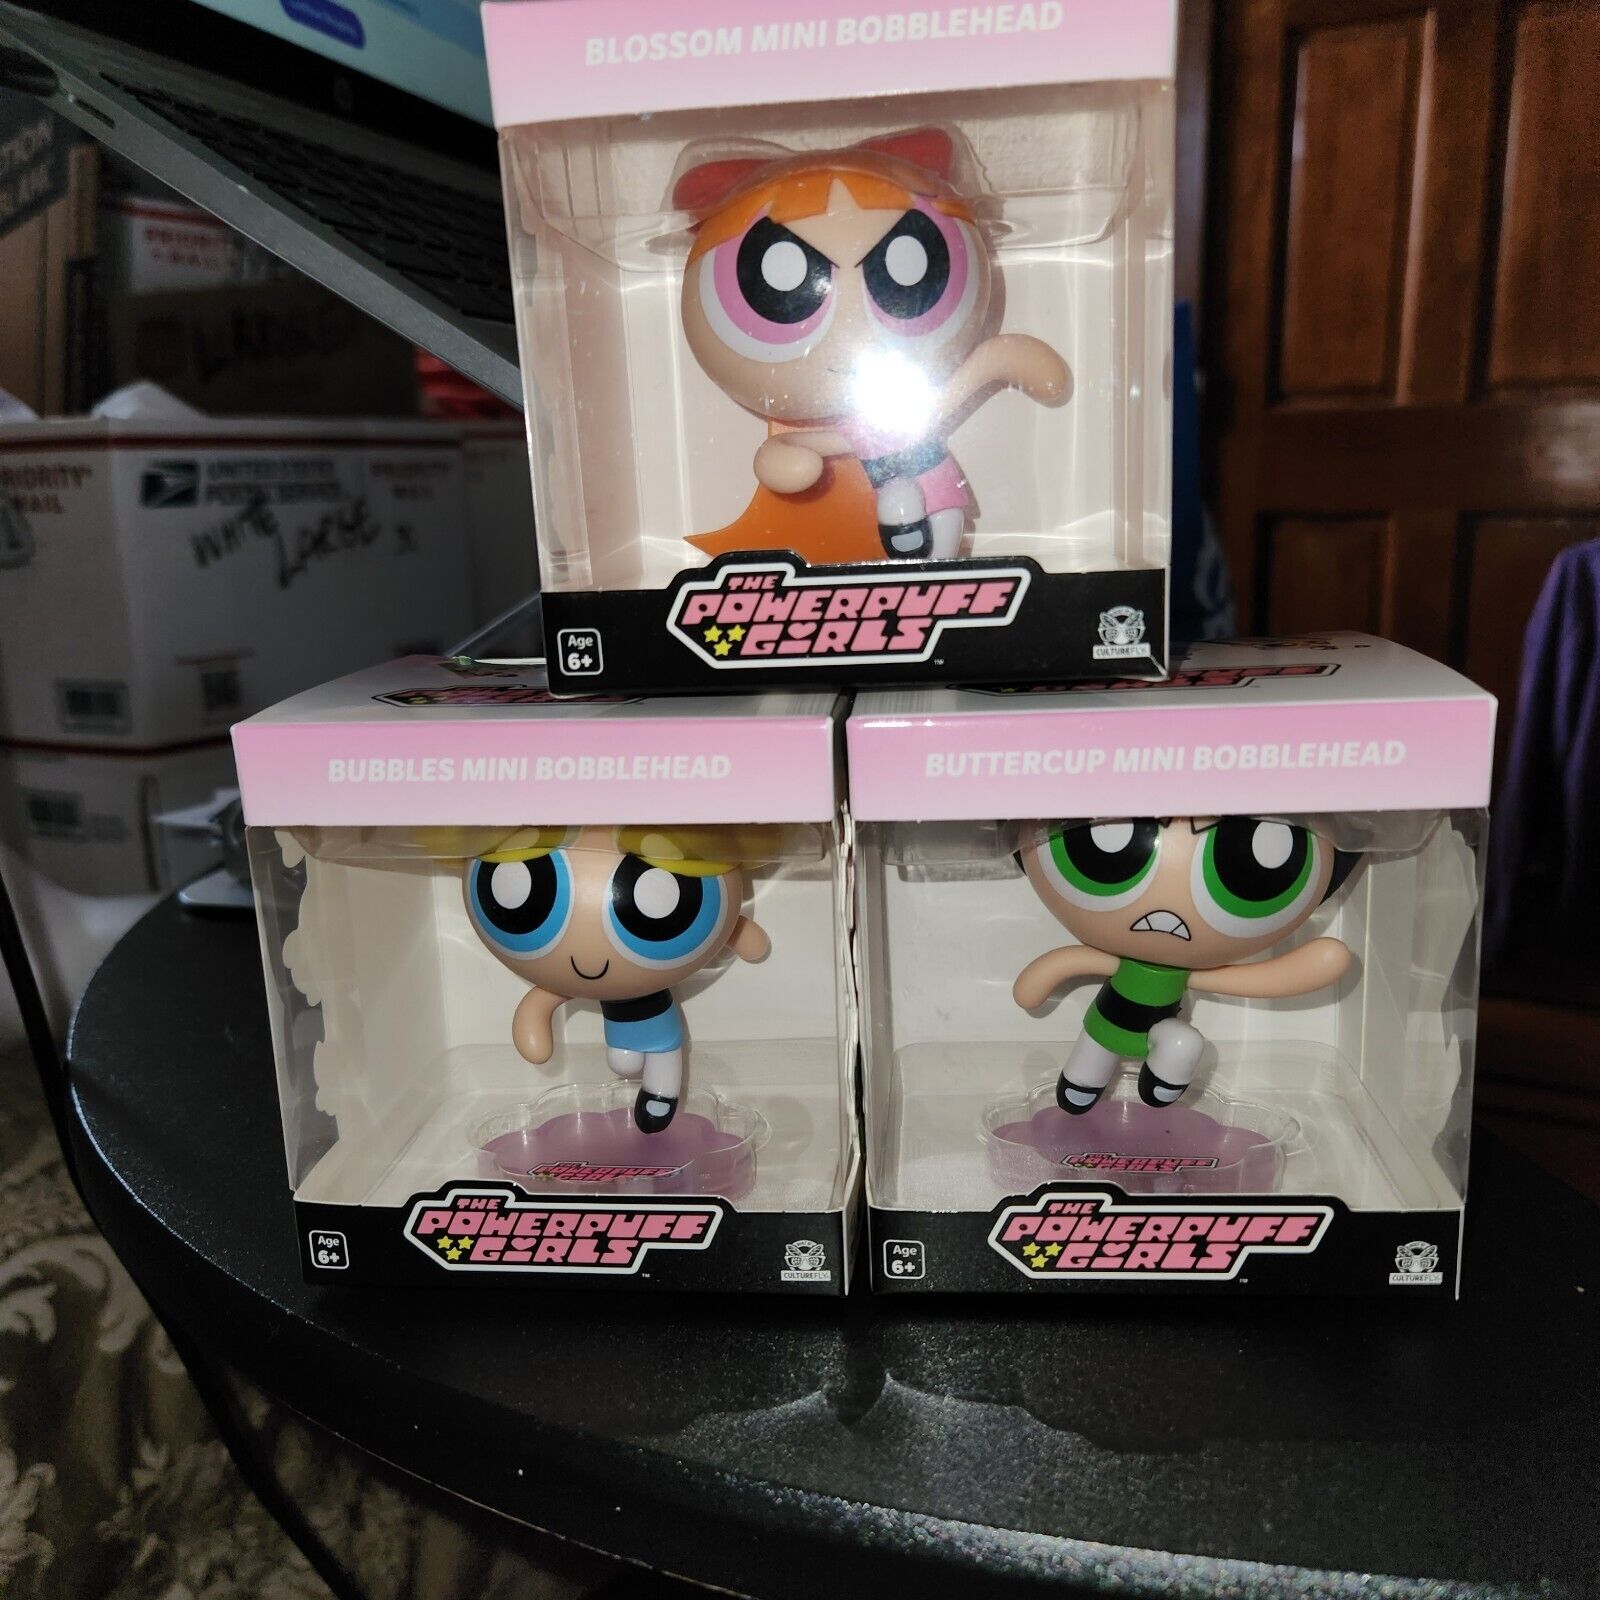 NEW Complete set Of 3 - Powerpuff Girls Mini Bobbleheads - Culturefly lot of 3